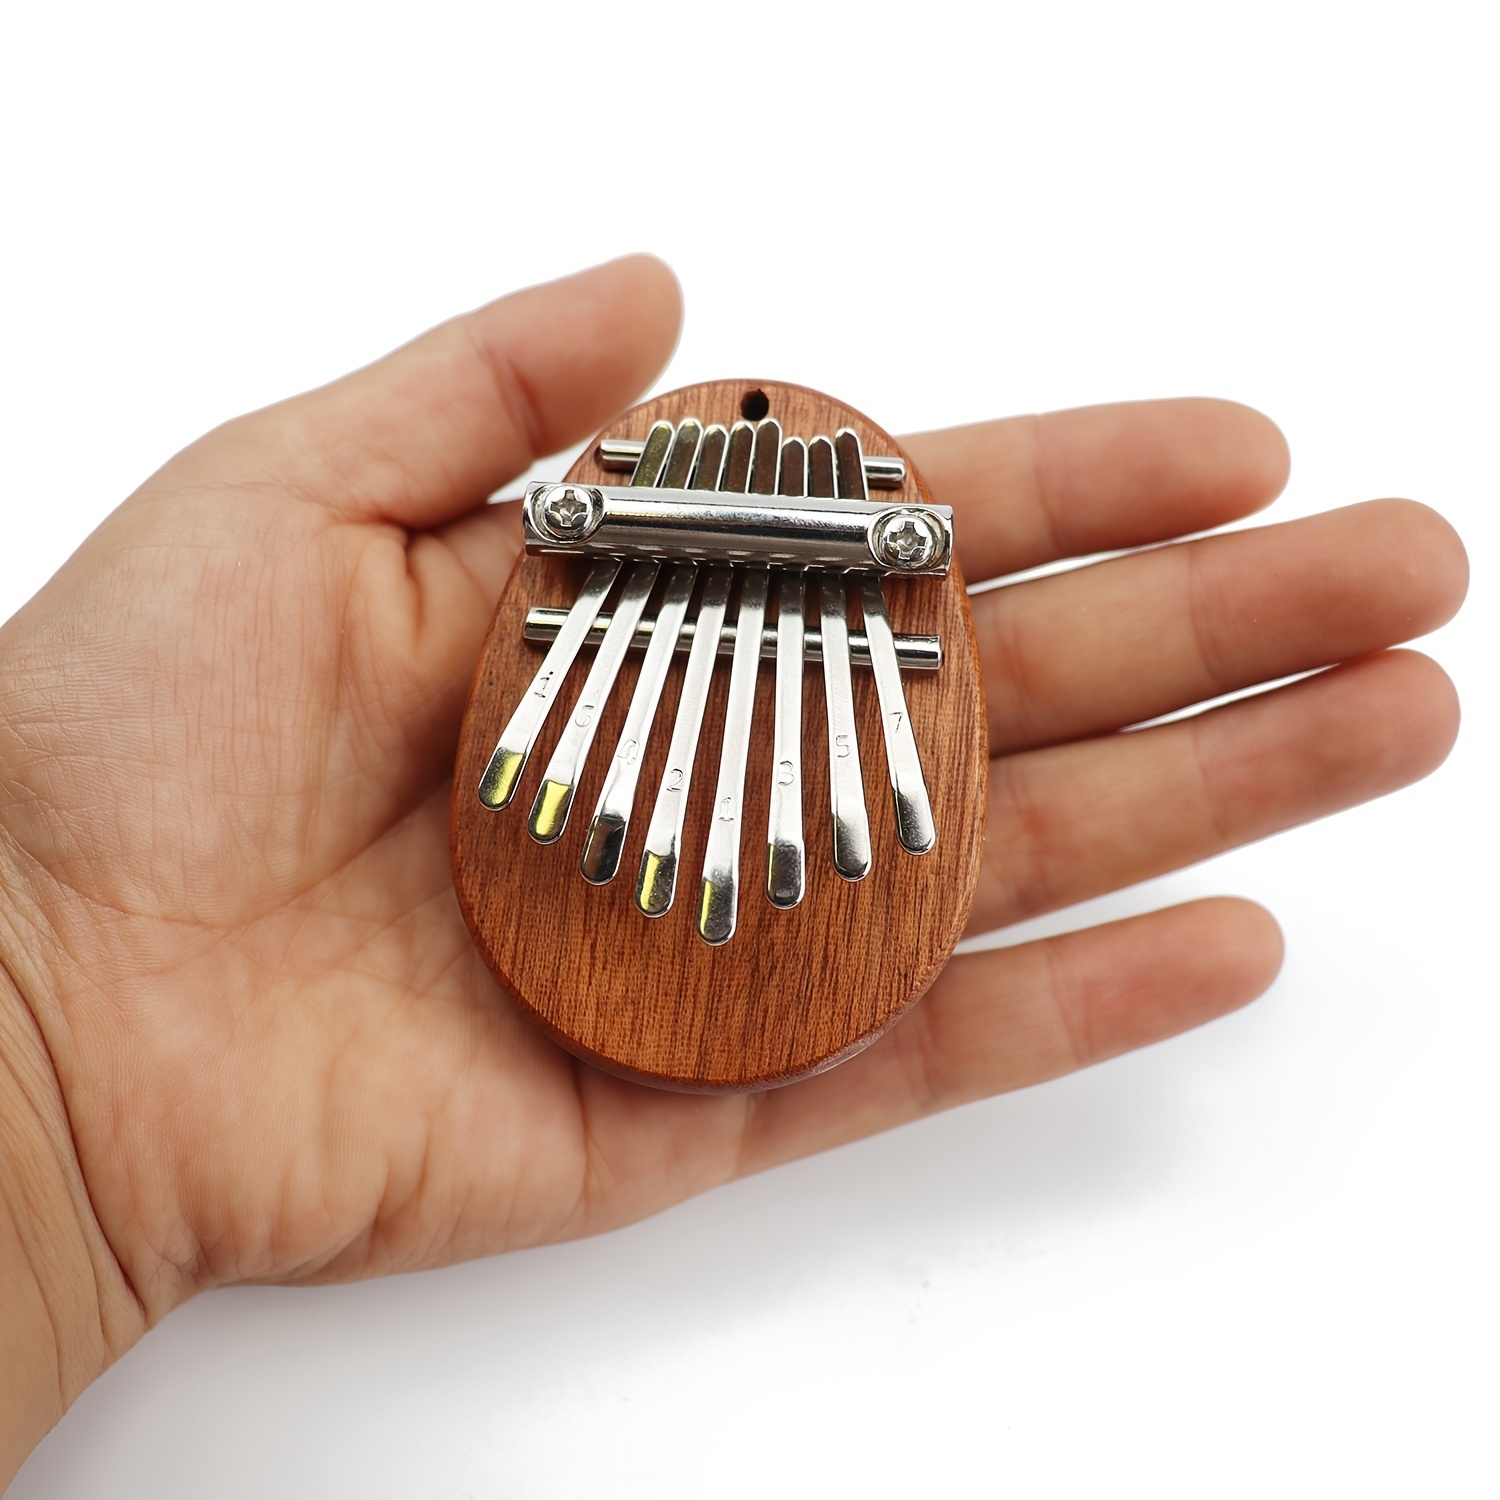 8 Key Mini Wooden Kalimba High Quality Exquisite Finger - Temu